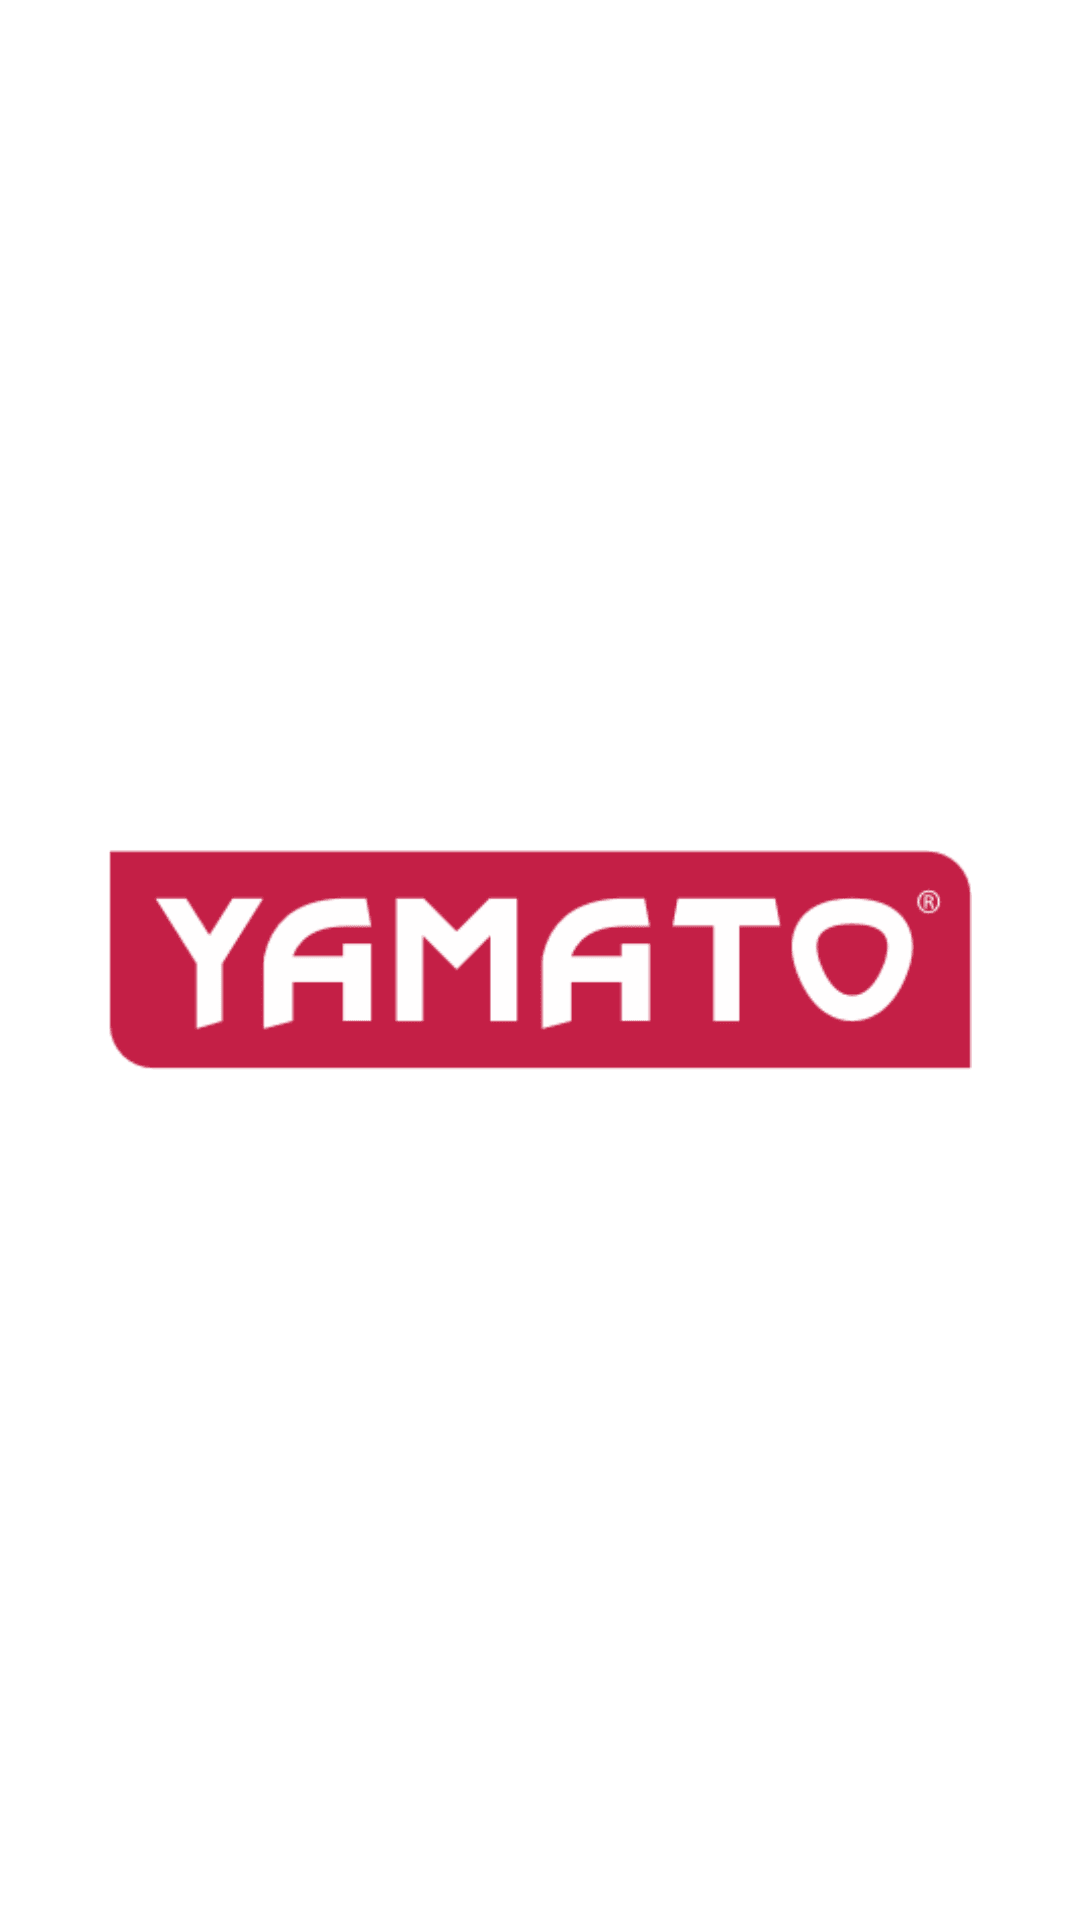 Yamato - Levigatrice rotorbitale elettrica 450W ø mm.125 Yamato